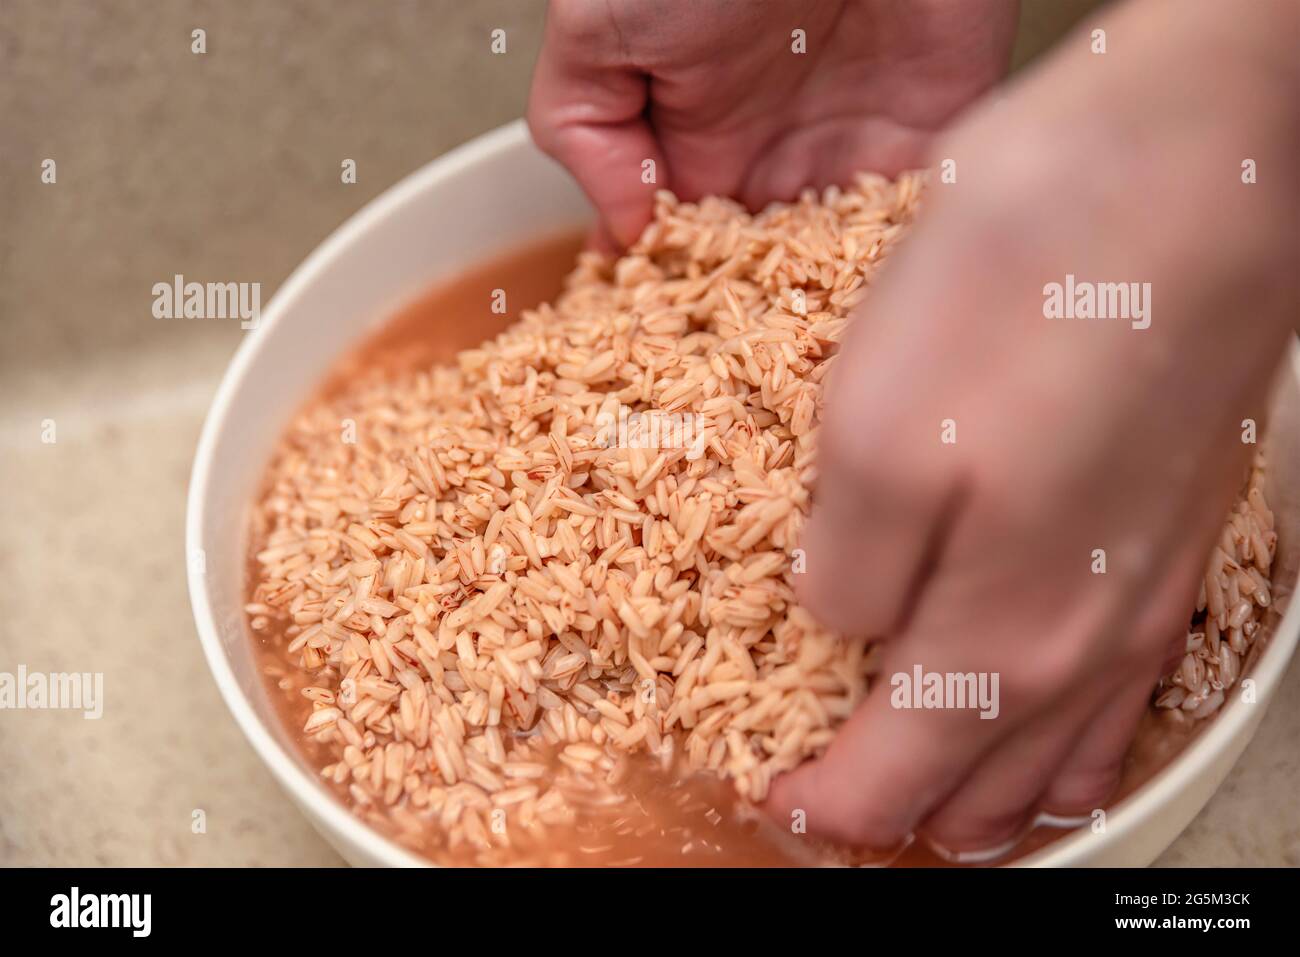 https://c8.alamy.com/compes/2g5m3ck/cocinar-pilaf-en-un-caldero-una-receta-para-pilaf-verdadero-remoje-el-arroz-en-un-recipiente-de-agua-antes-de-cocinarlo-arroz-devzira-para-pilaf-cocinar-pilaf-en-casa-2g5m3ck.jpg